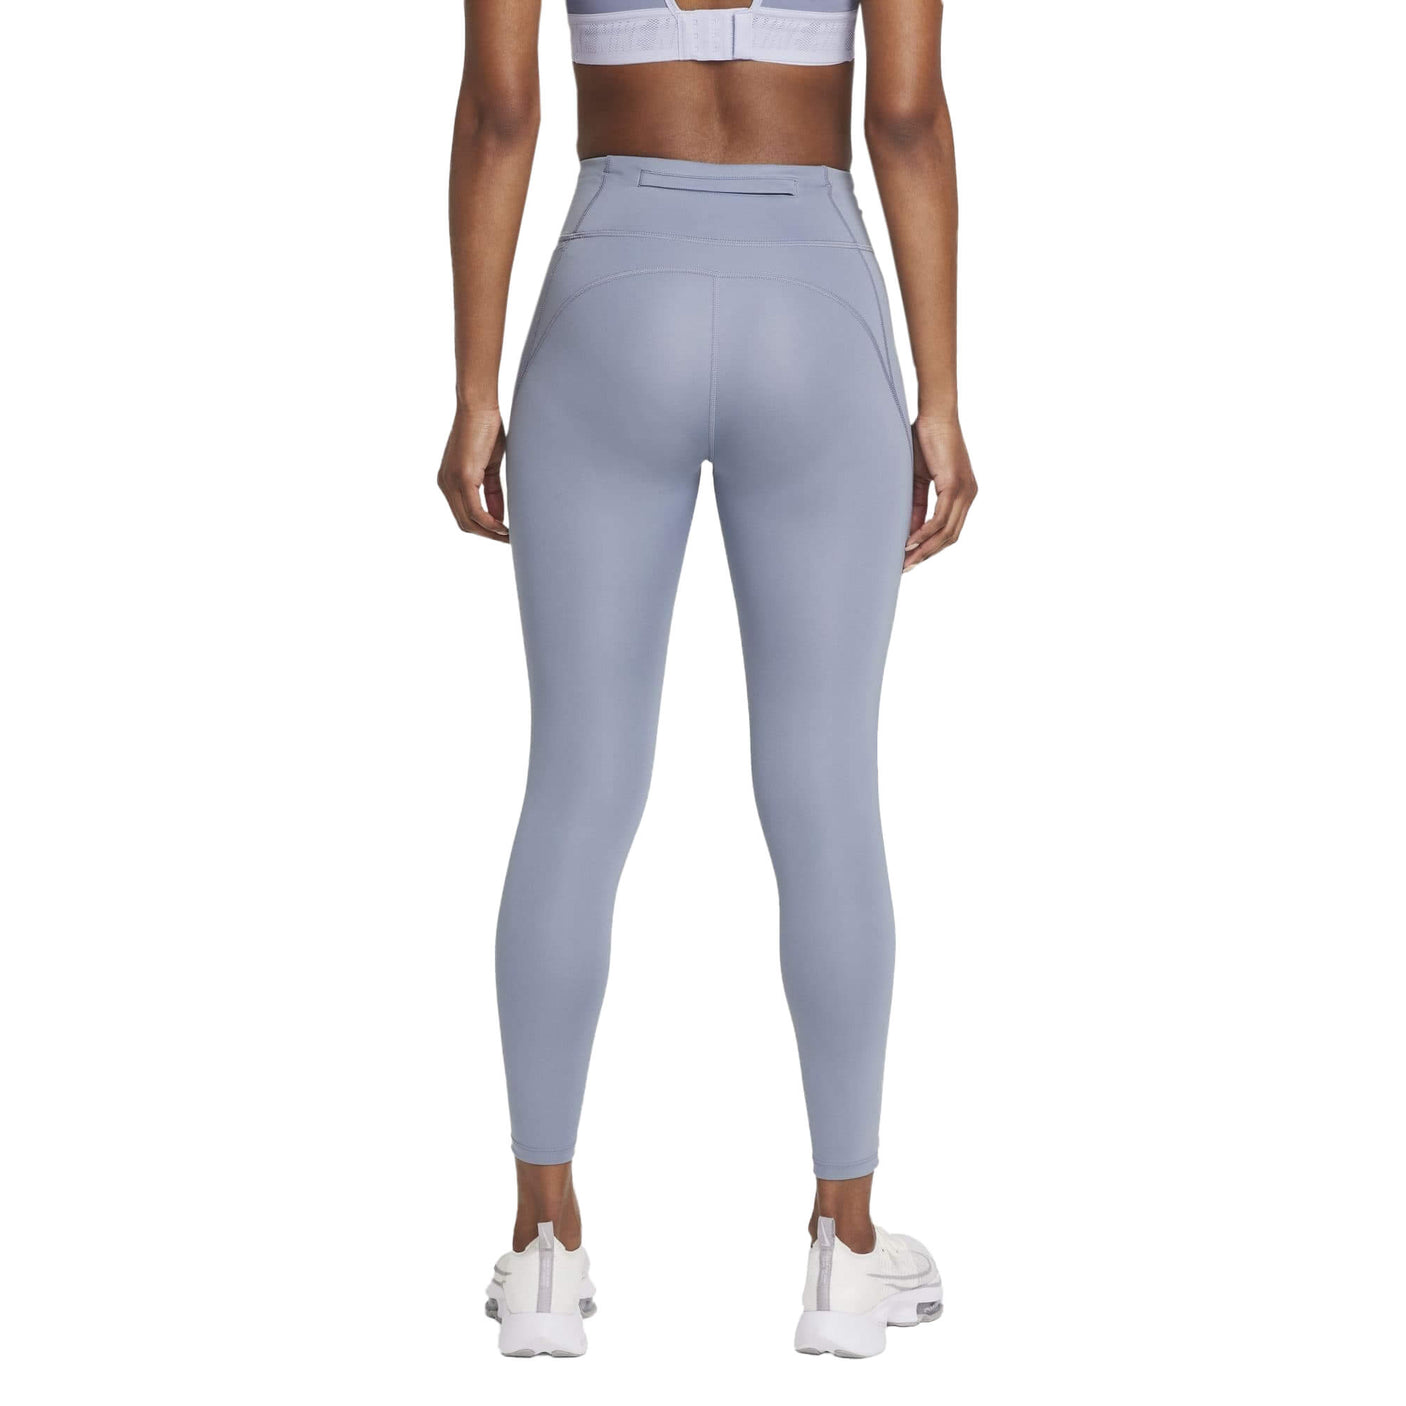 Nike Women's Logo Dri-Fit High Rise 7/8 Tight Running Pants (Fuchsia, Small)